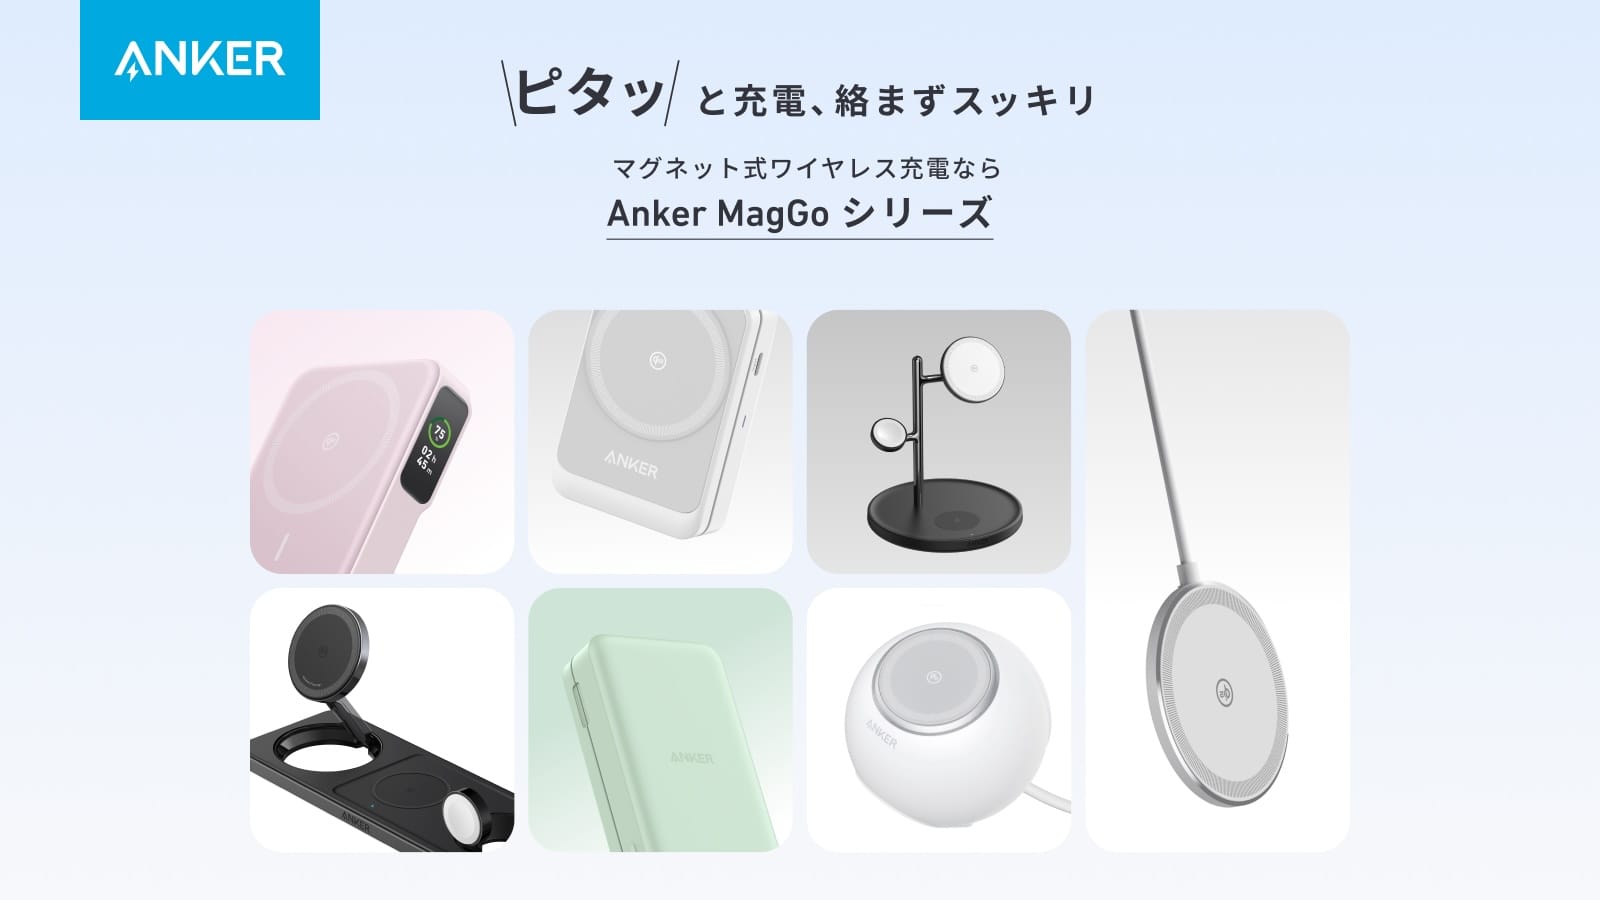 Anker、Qi2対応マグネット式ワイヤレ充電器やオープンイヤー型ワイヤレスイヤフォンなどを発売